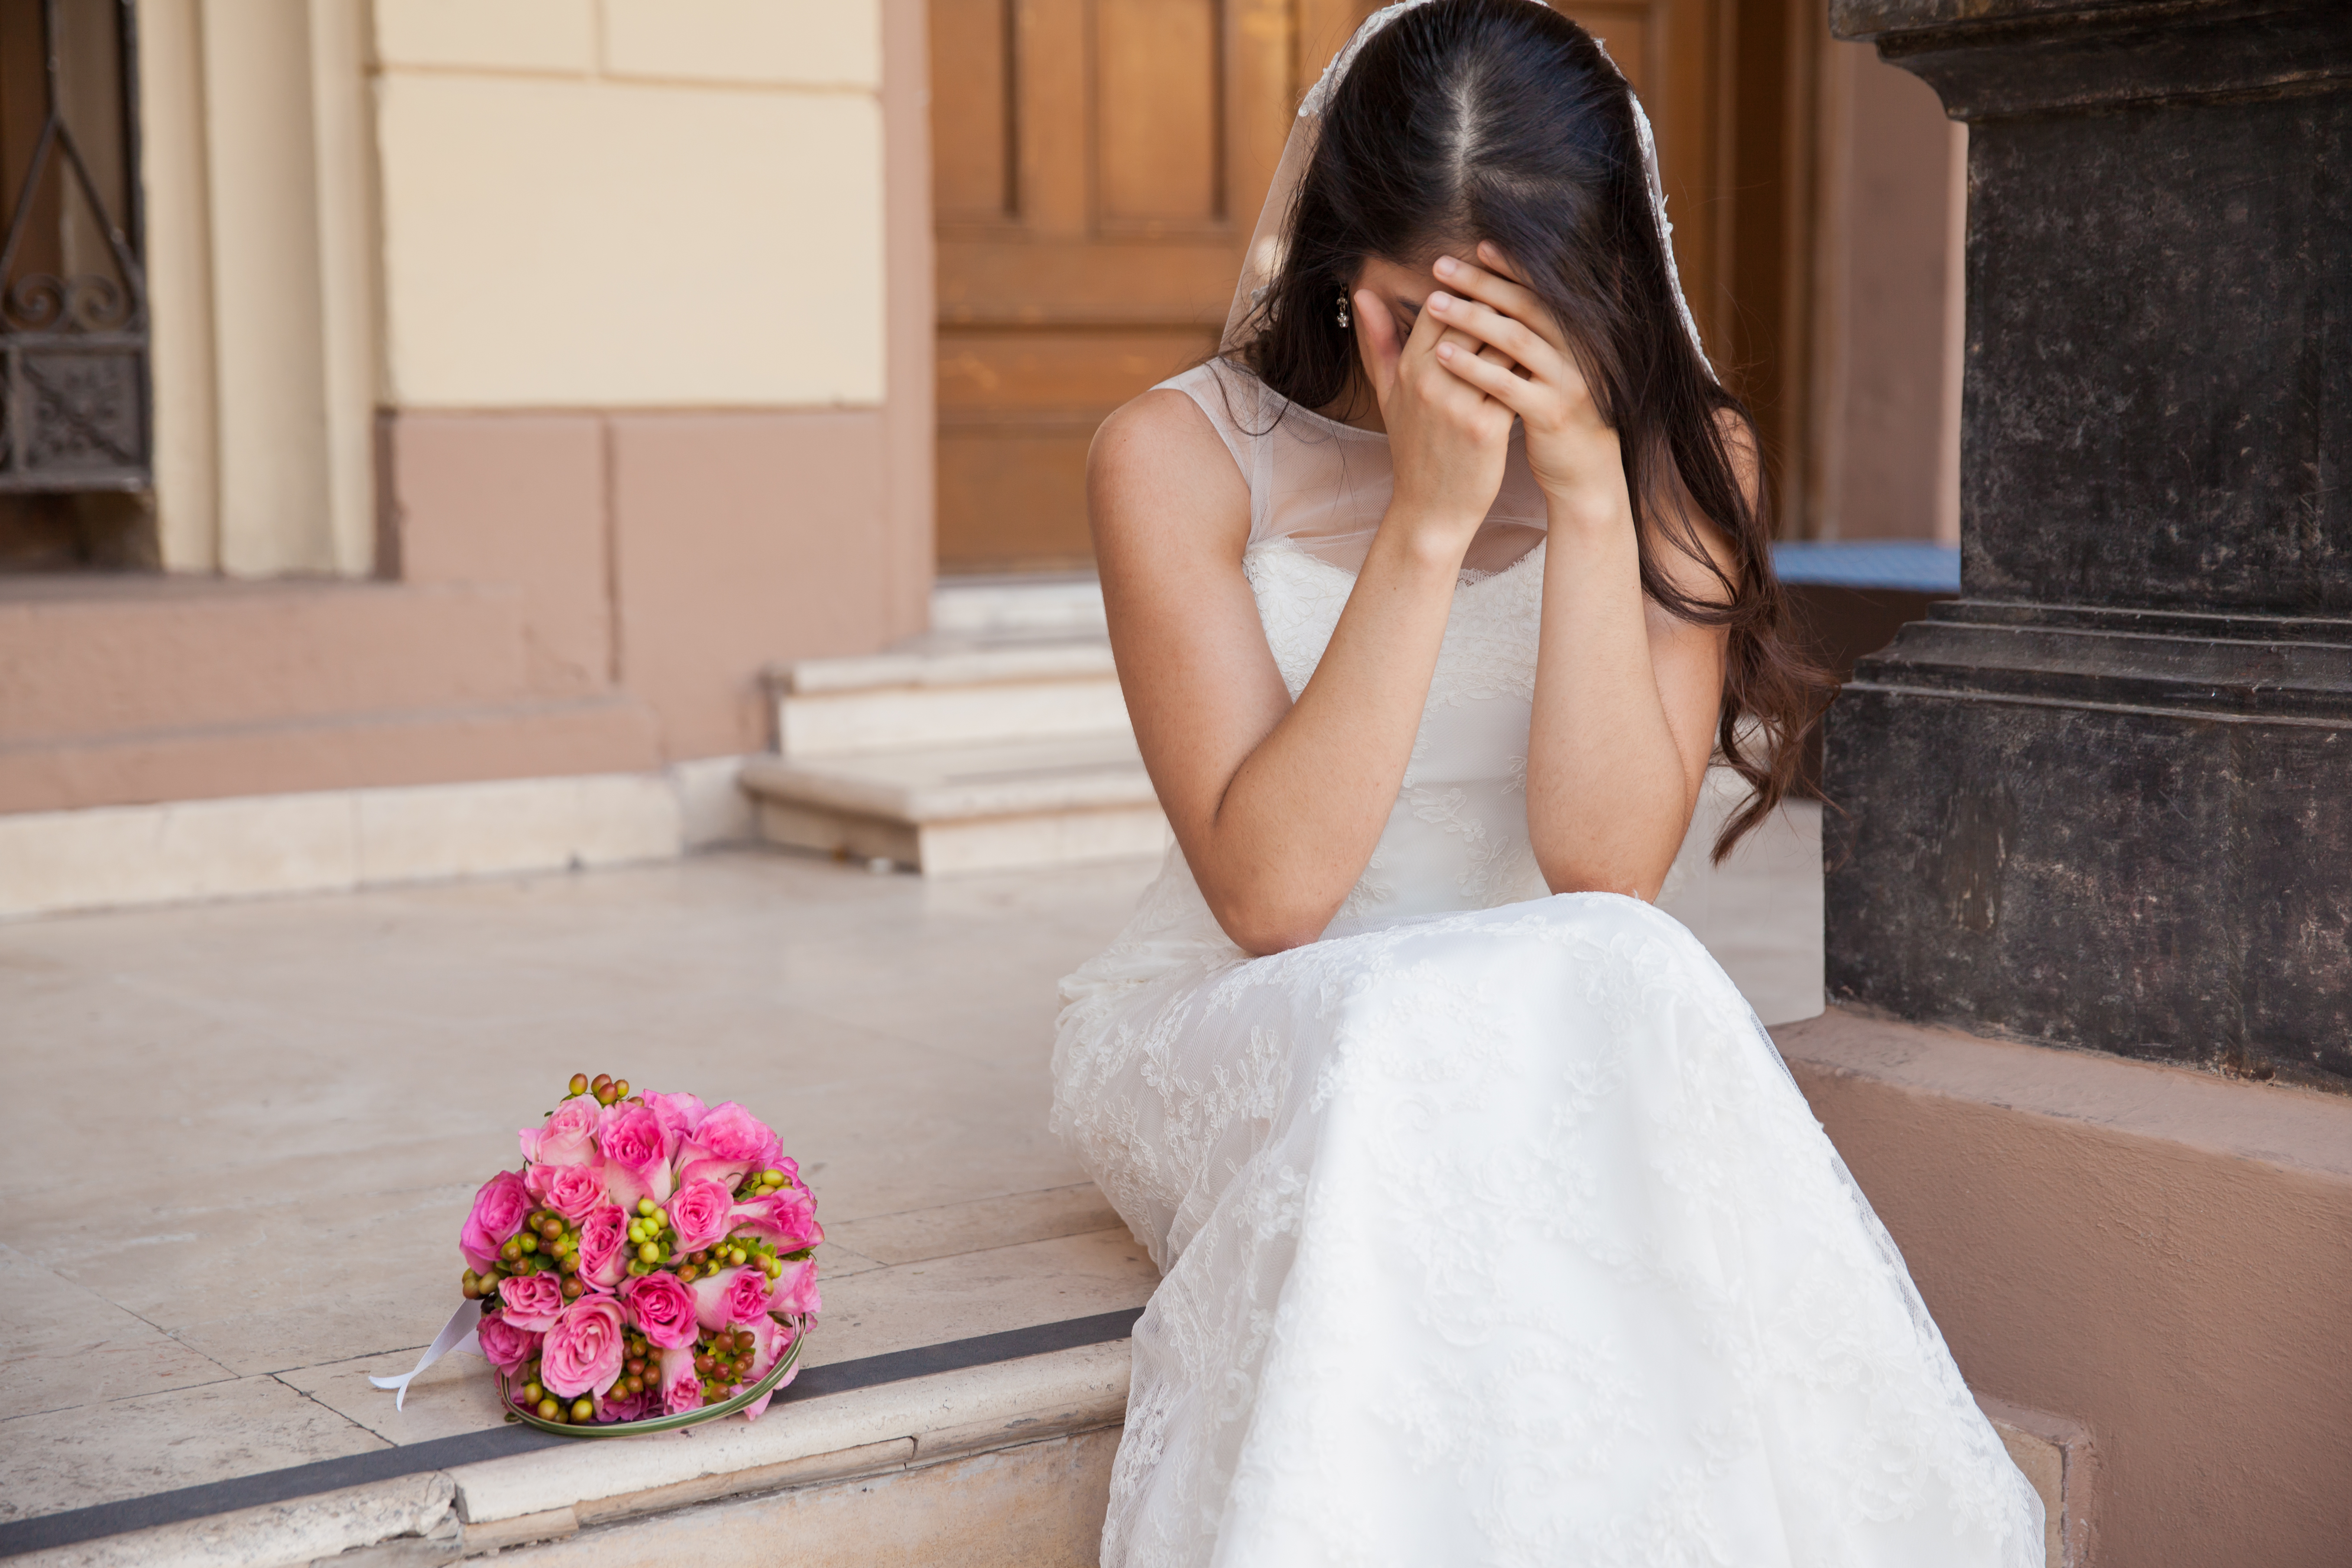 Une mariée triste | Source : Shutterstock